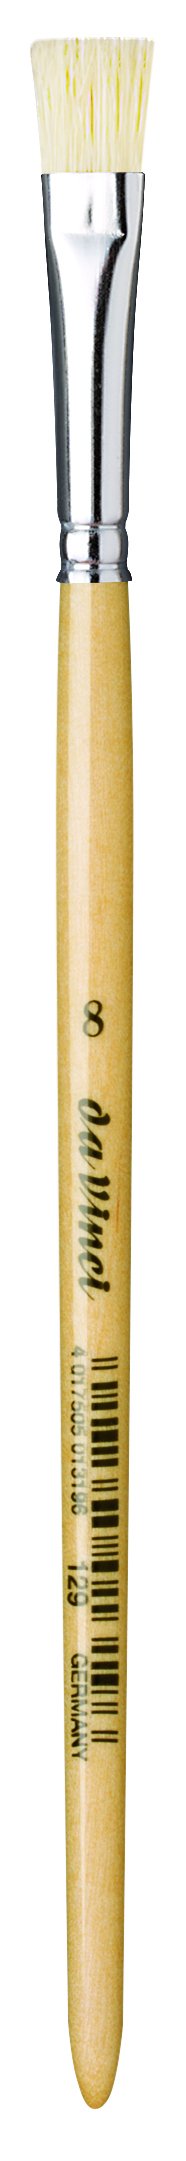 Pennelli Da Vinci Junior borste punta piatta setola sintetica n.8